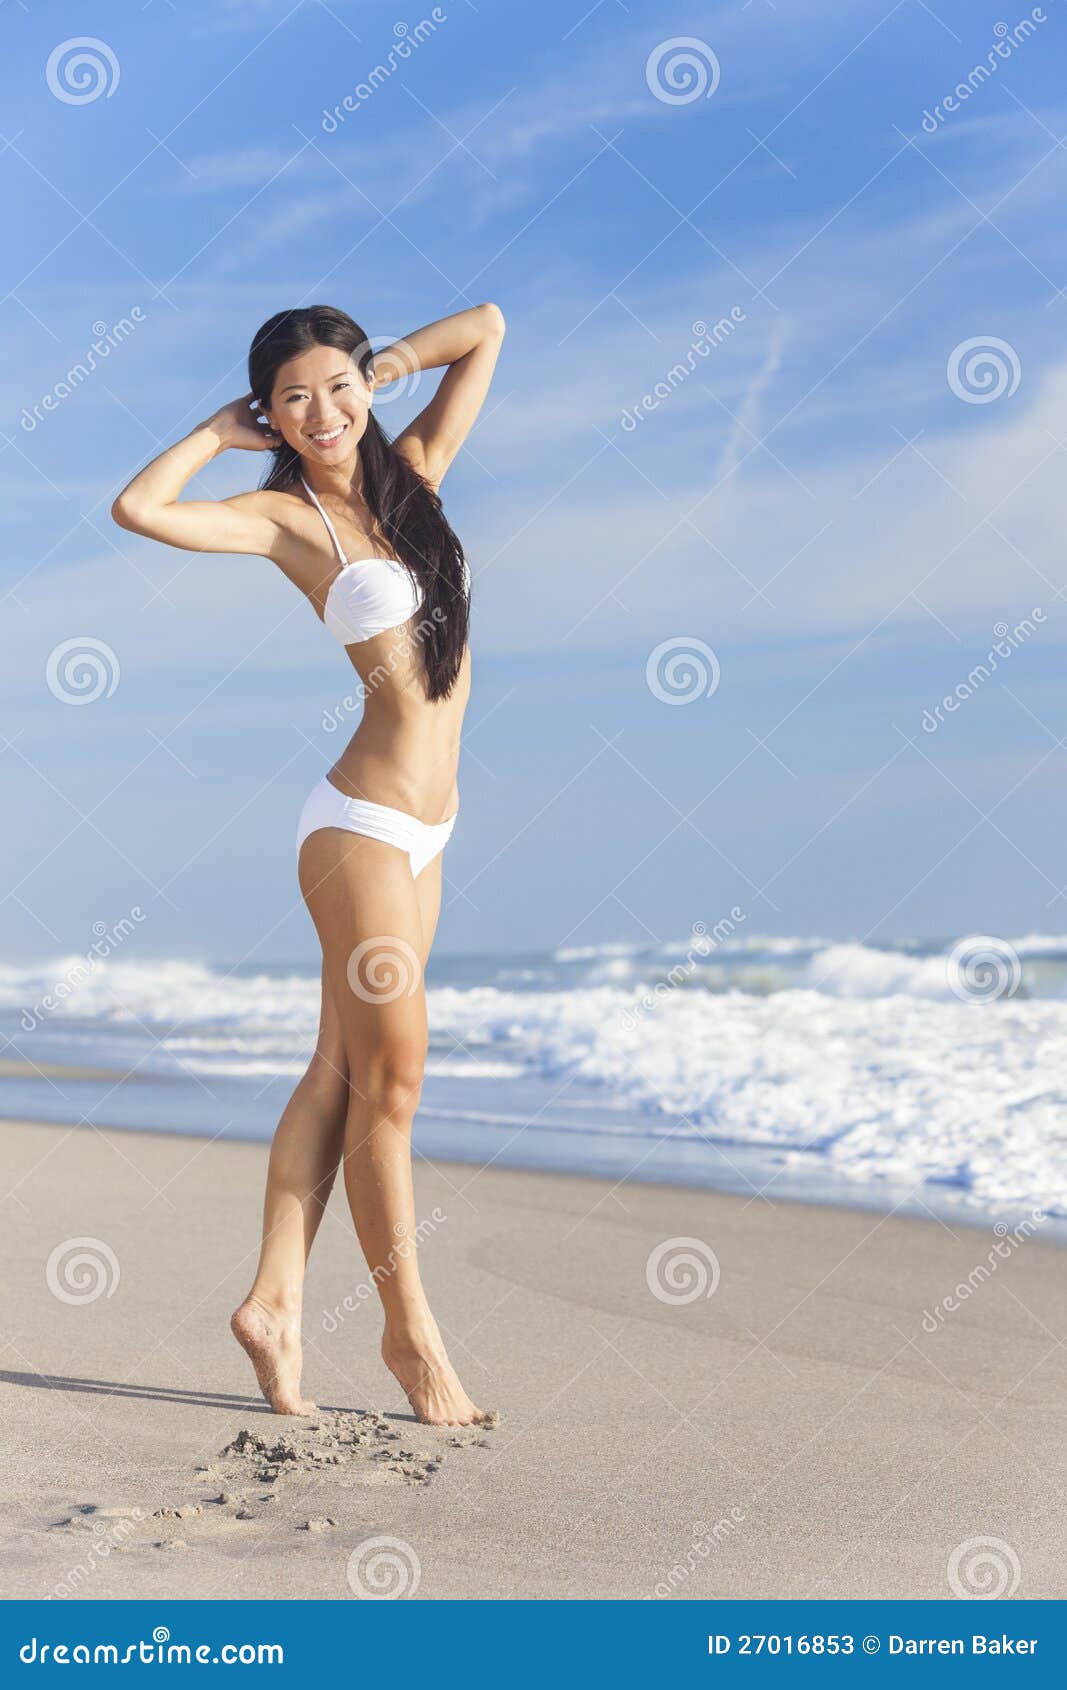 asian girl nudist beach free pics hd